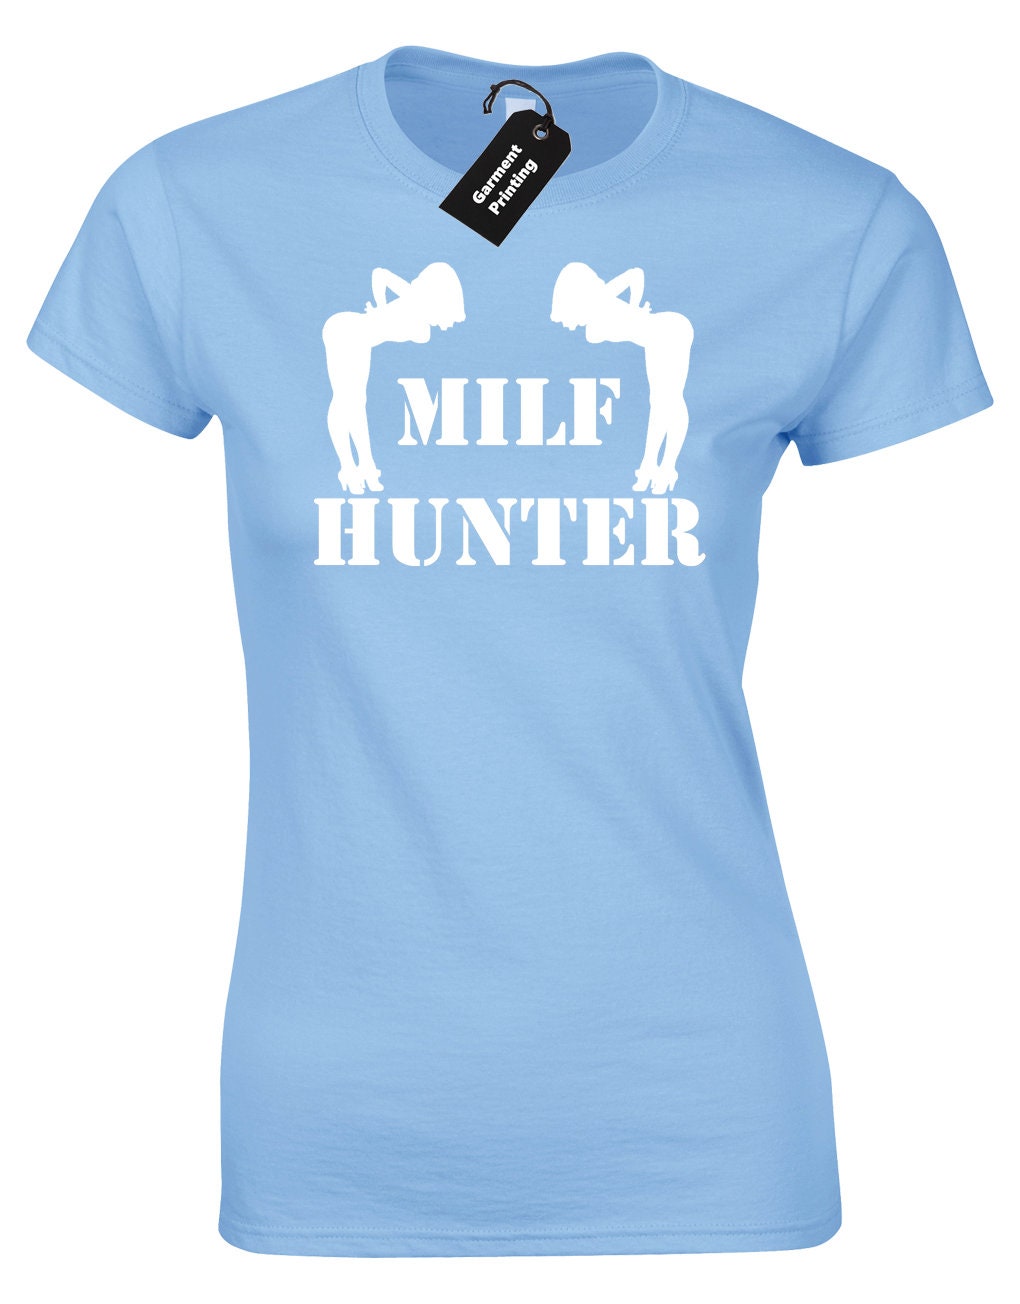 Milf Hunter Ladies T-shirt Funny Rude Design Joke Explicit photo pic